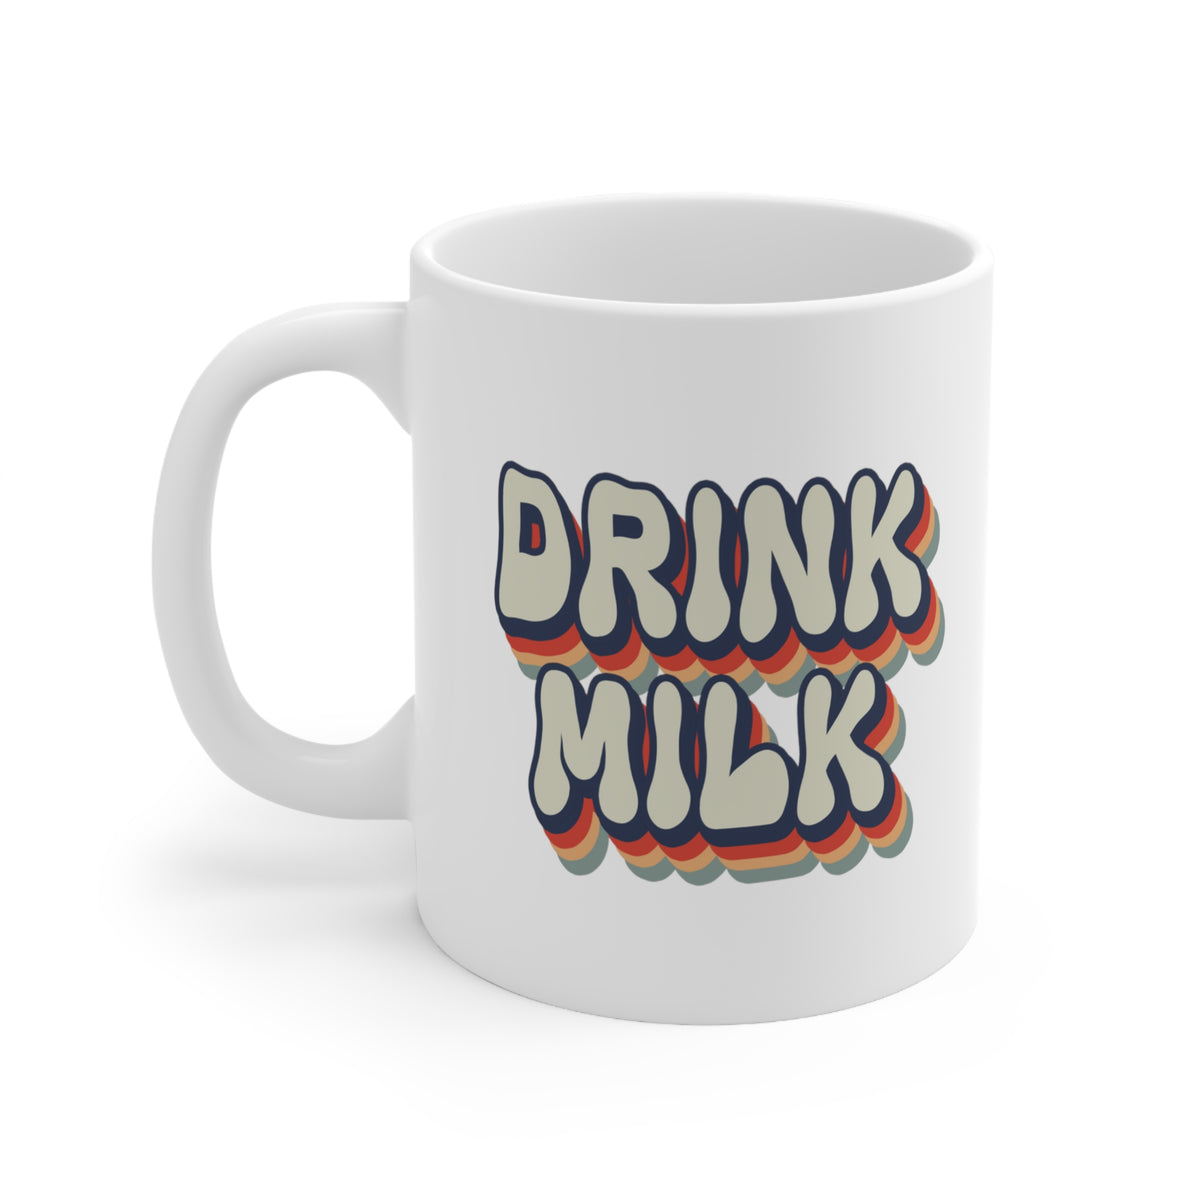 Funny Coffee Mug Gift For Milk Lovers - Drink Milk - Birthday Present - Christmas Gift